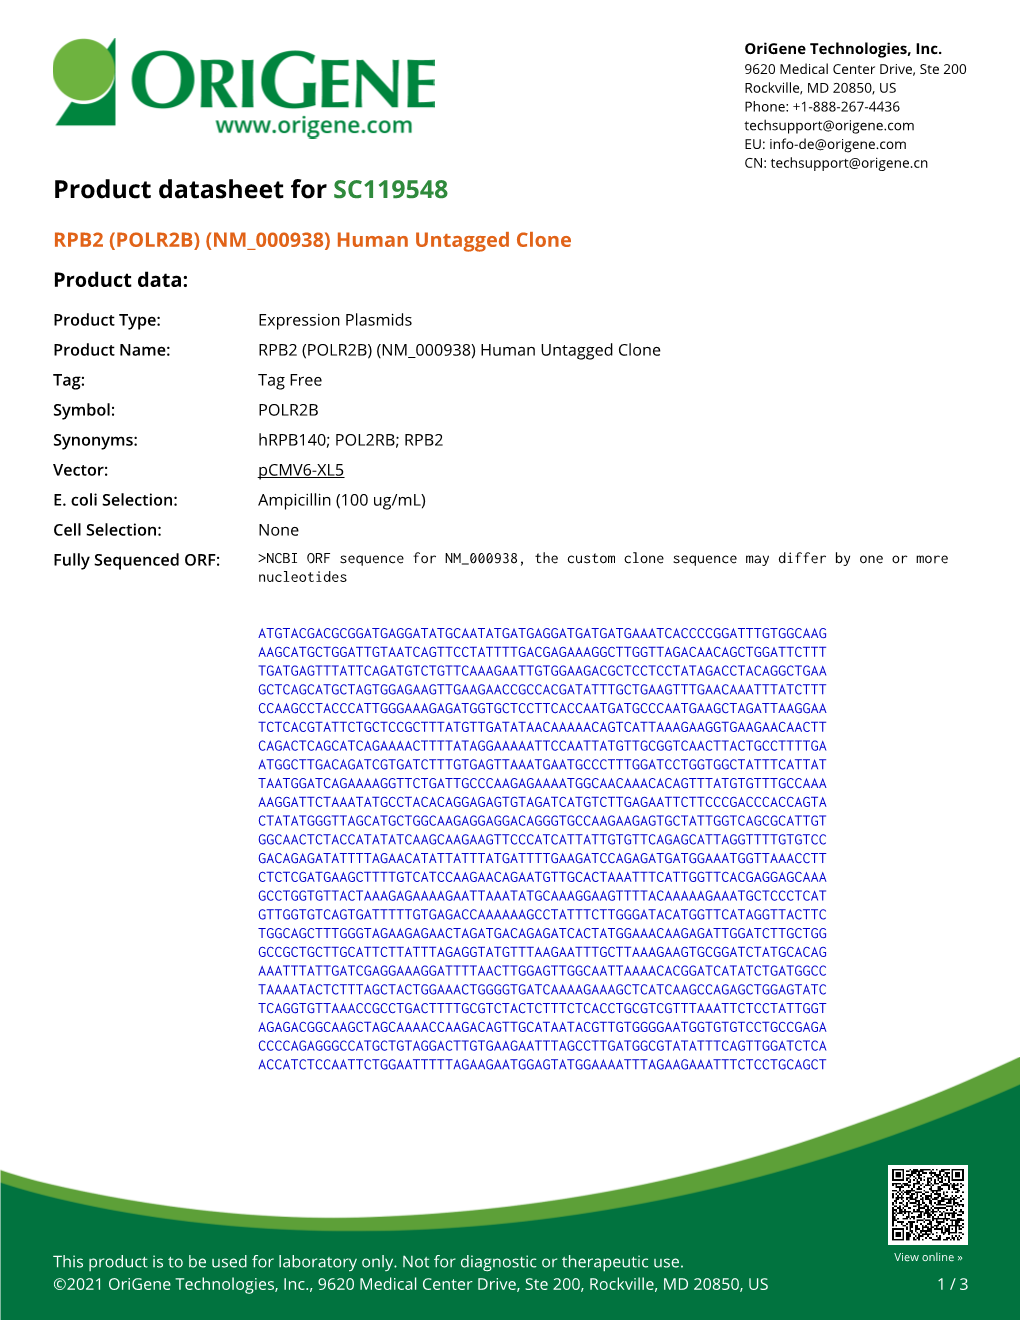 RPB2 (POLR2B) (NM 000938) Human Untagged Clone Product Data